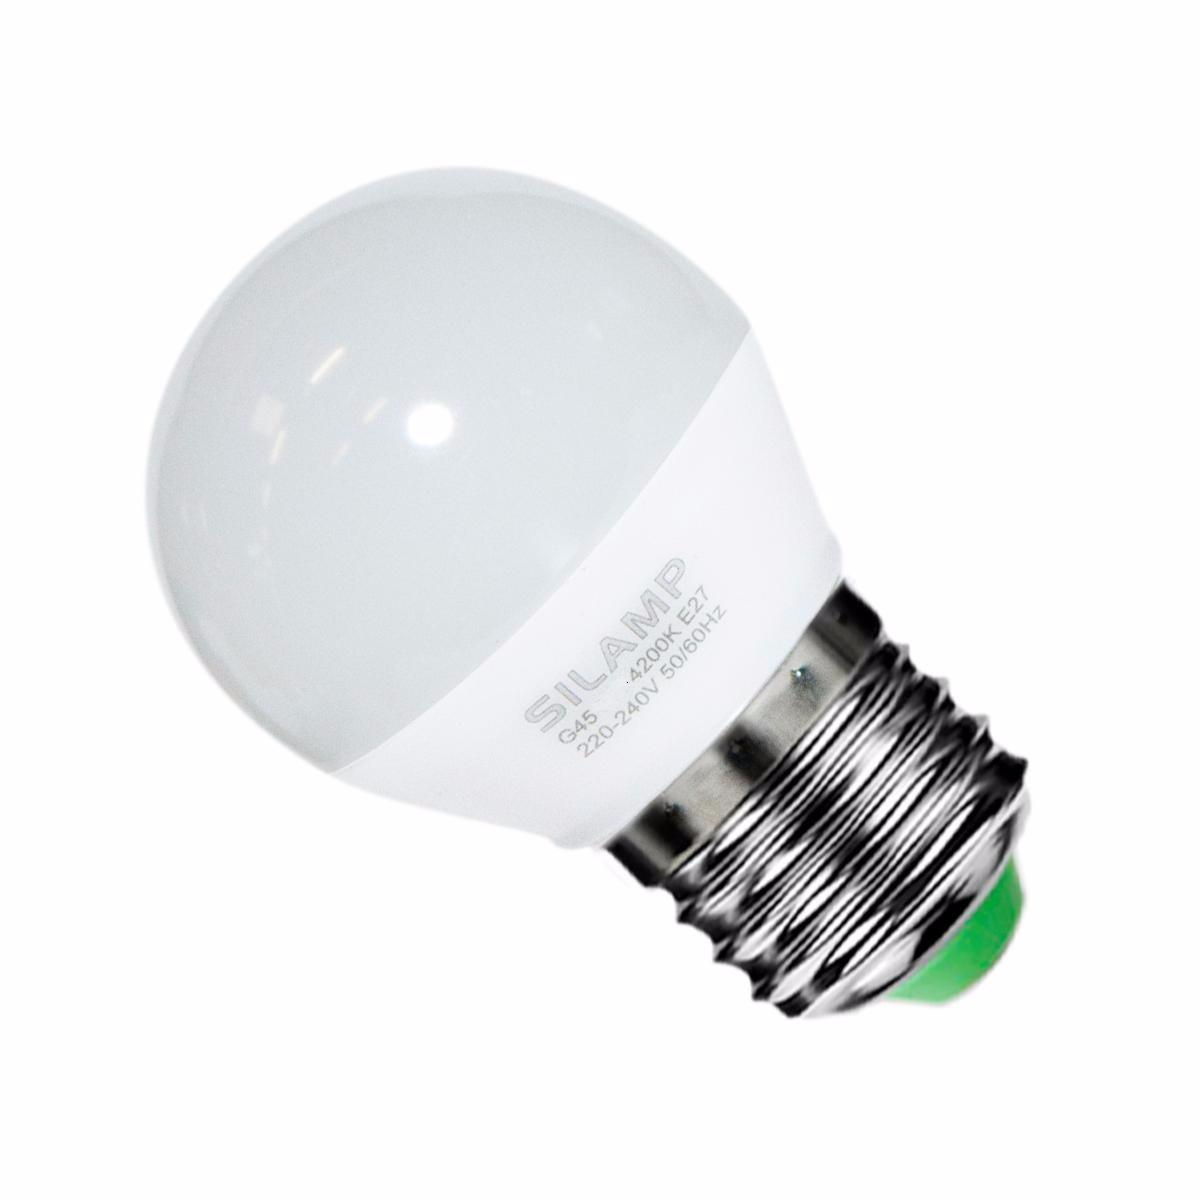 Ampoule LED E27 6W 220V G50 220° - Silamp France